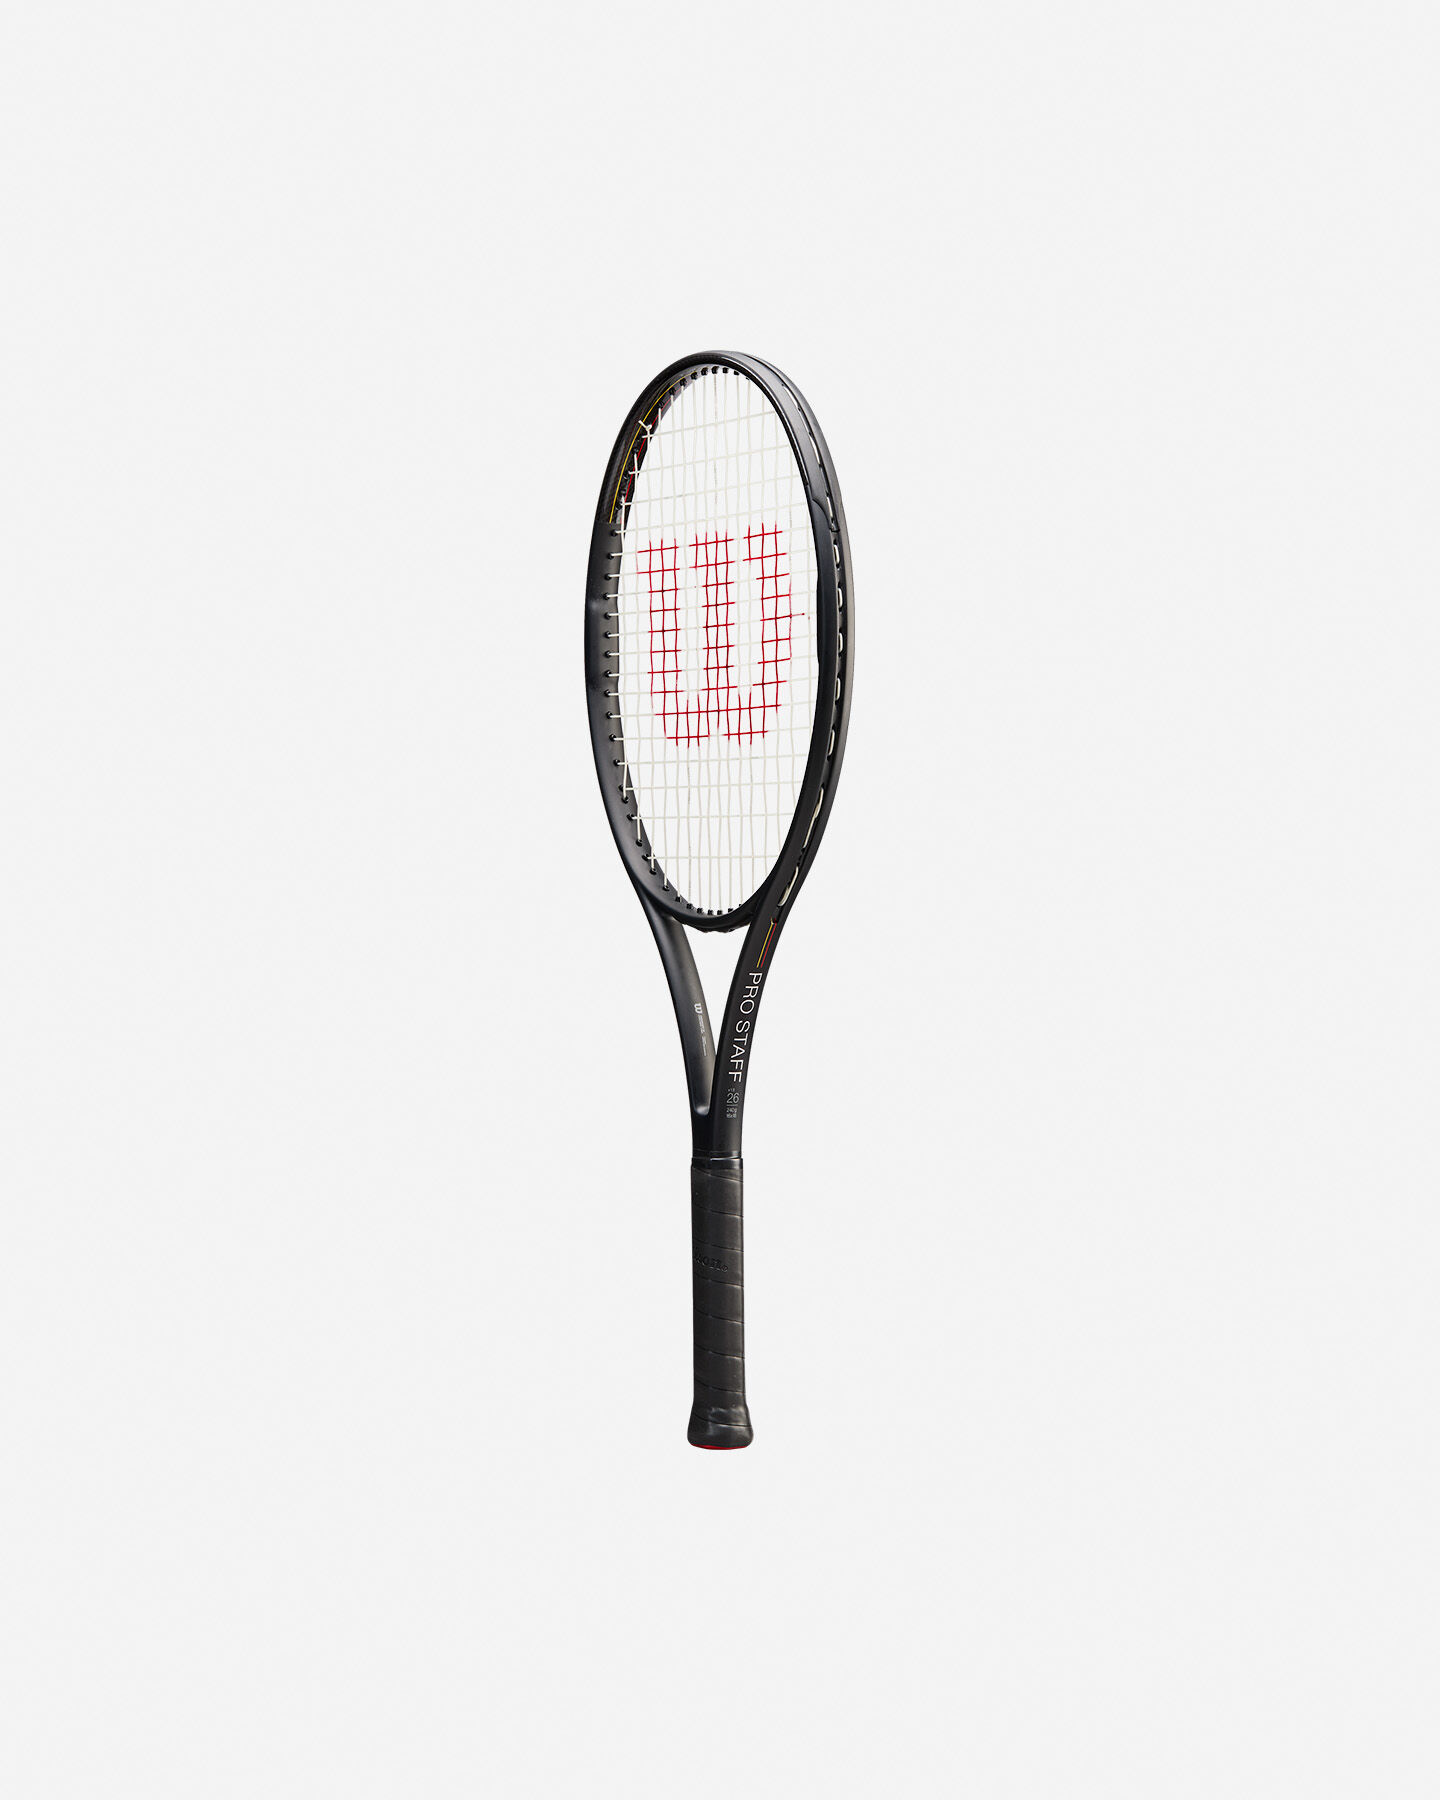  Racchetta tennis WILSON PRO STAFF 26 V13.0 JR S5344211|UNI|26 scatto 2